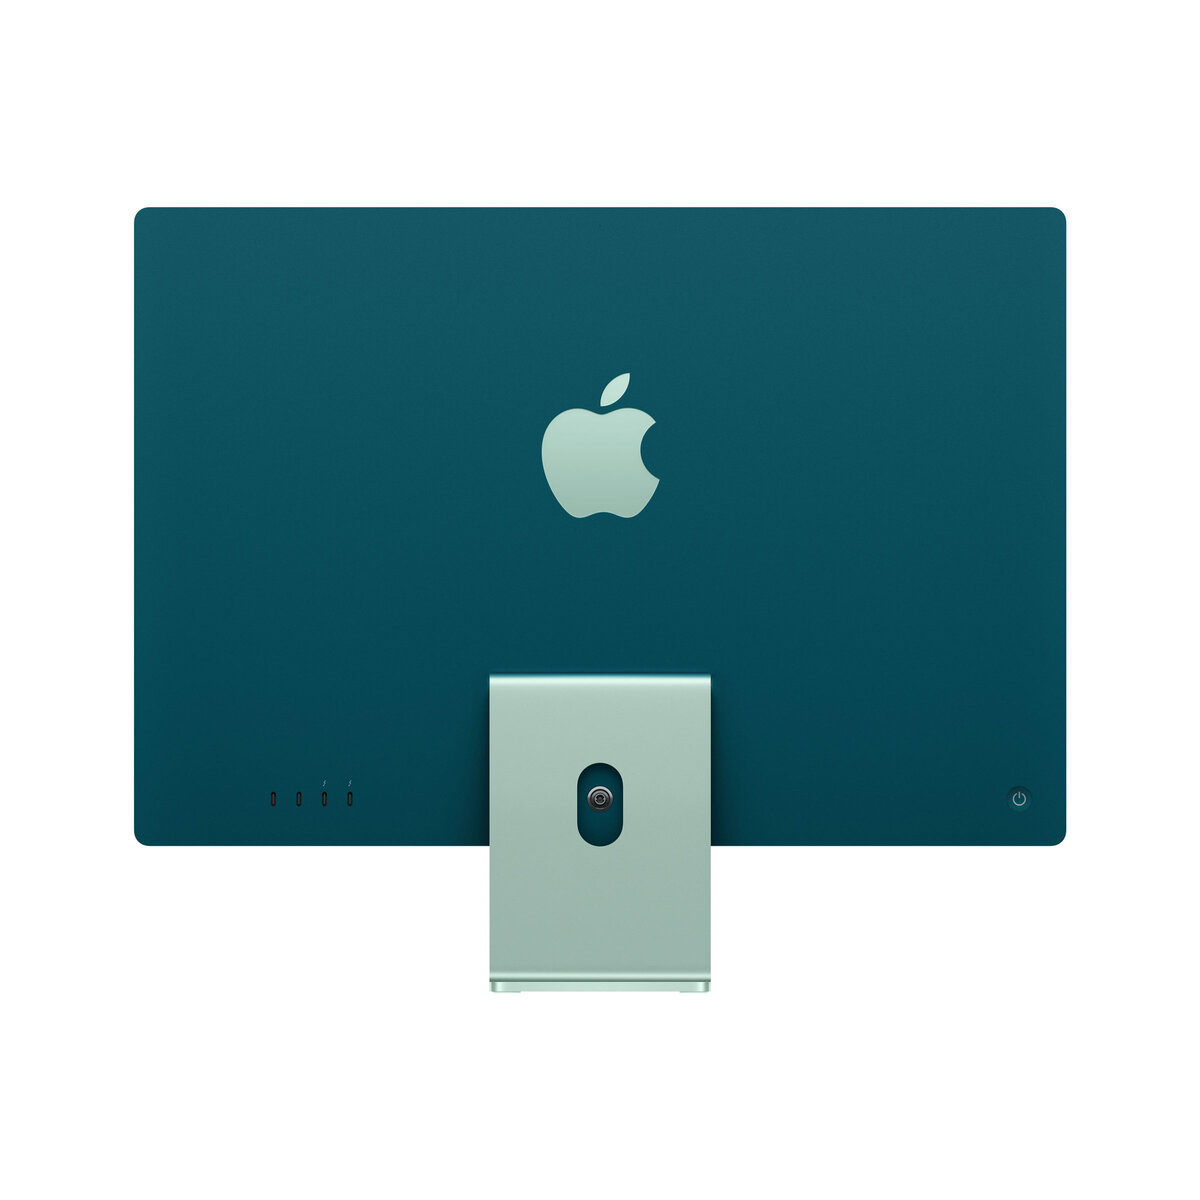 Buy Apple iMac 2021, Apple M1 Chip, 8-Core GPU, 16GB RAM, 2TB SSD, 24 Inch in Green at costco.co.uk